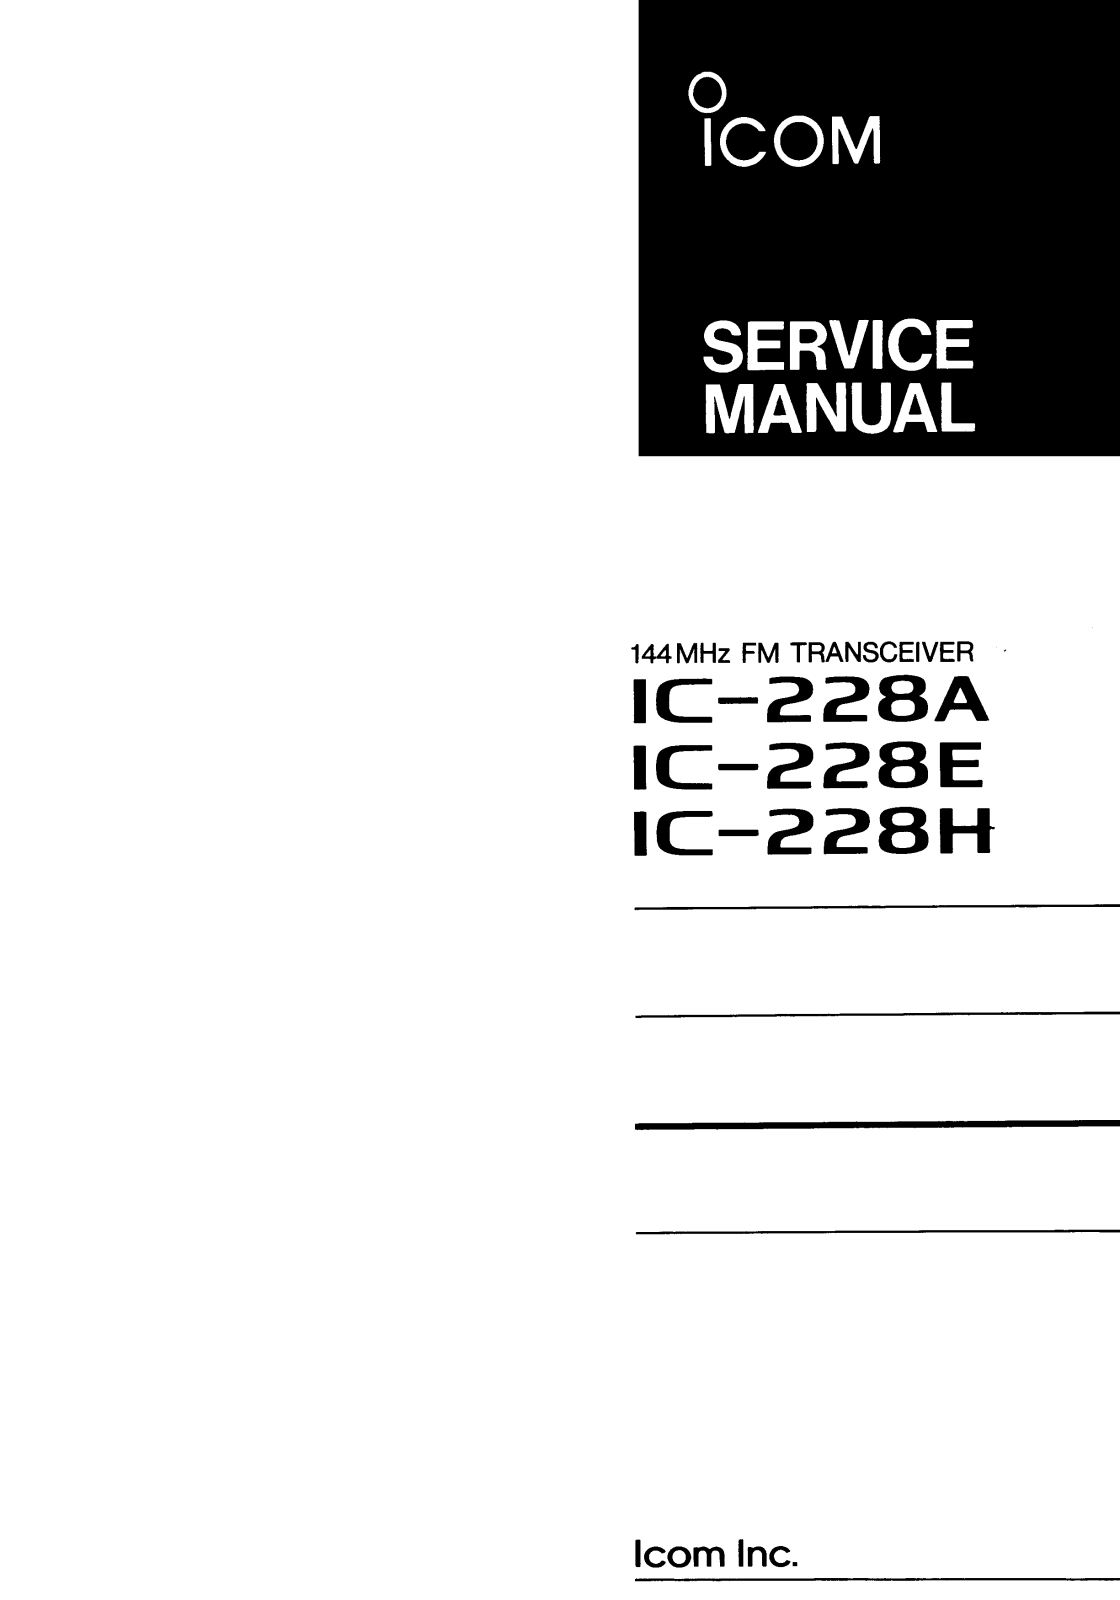 Icom IC-228H, IC-228E, IC-228A Service Manual